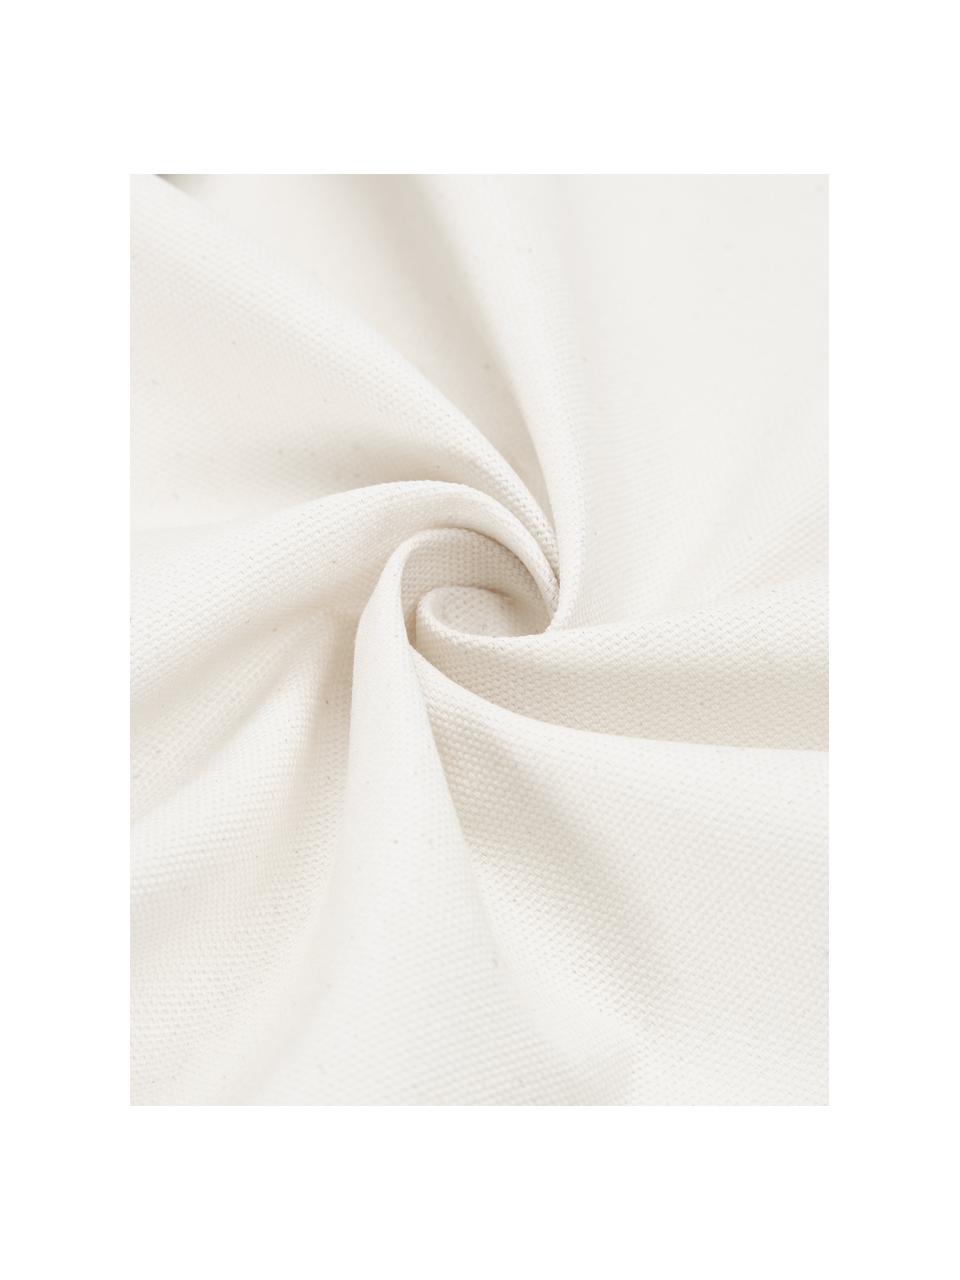 Federa arredo boho color bianco crema/nero Ausel, 100% cotone, Bianco, nero, Larg. 30 x Lung. 50 cm